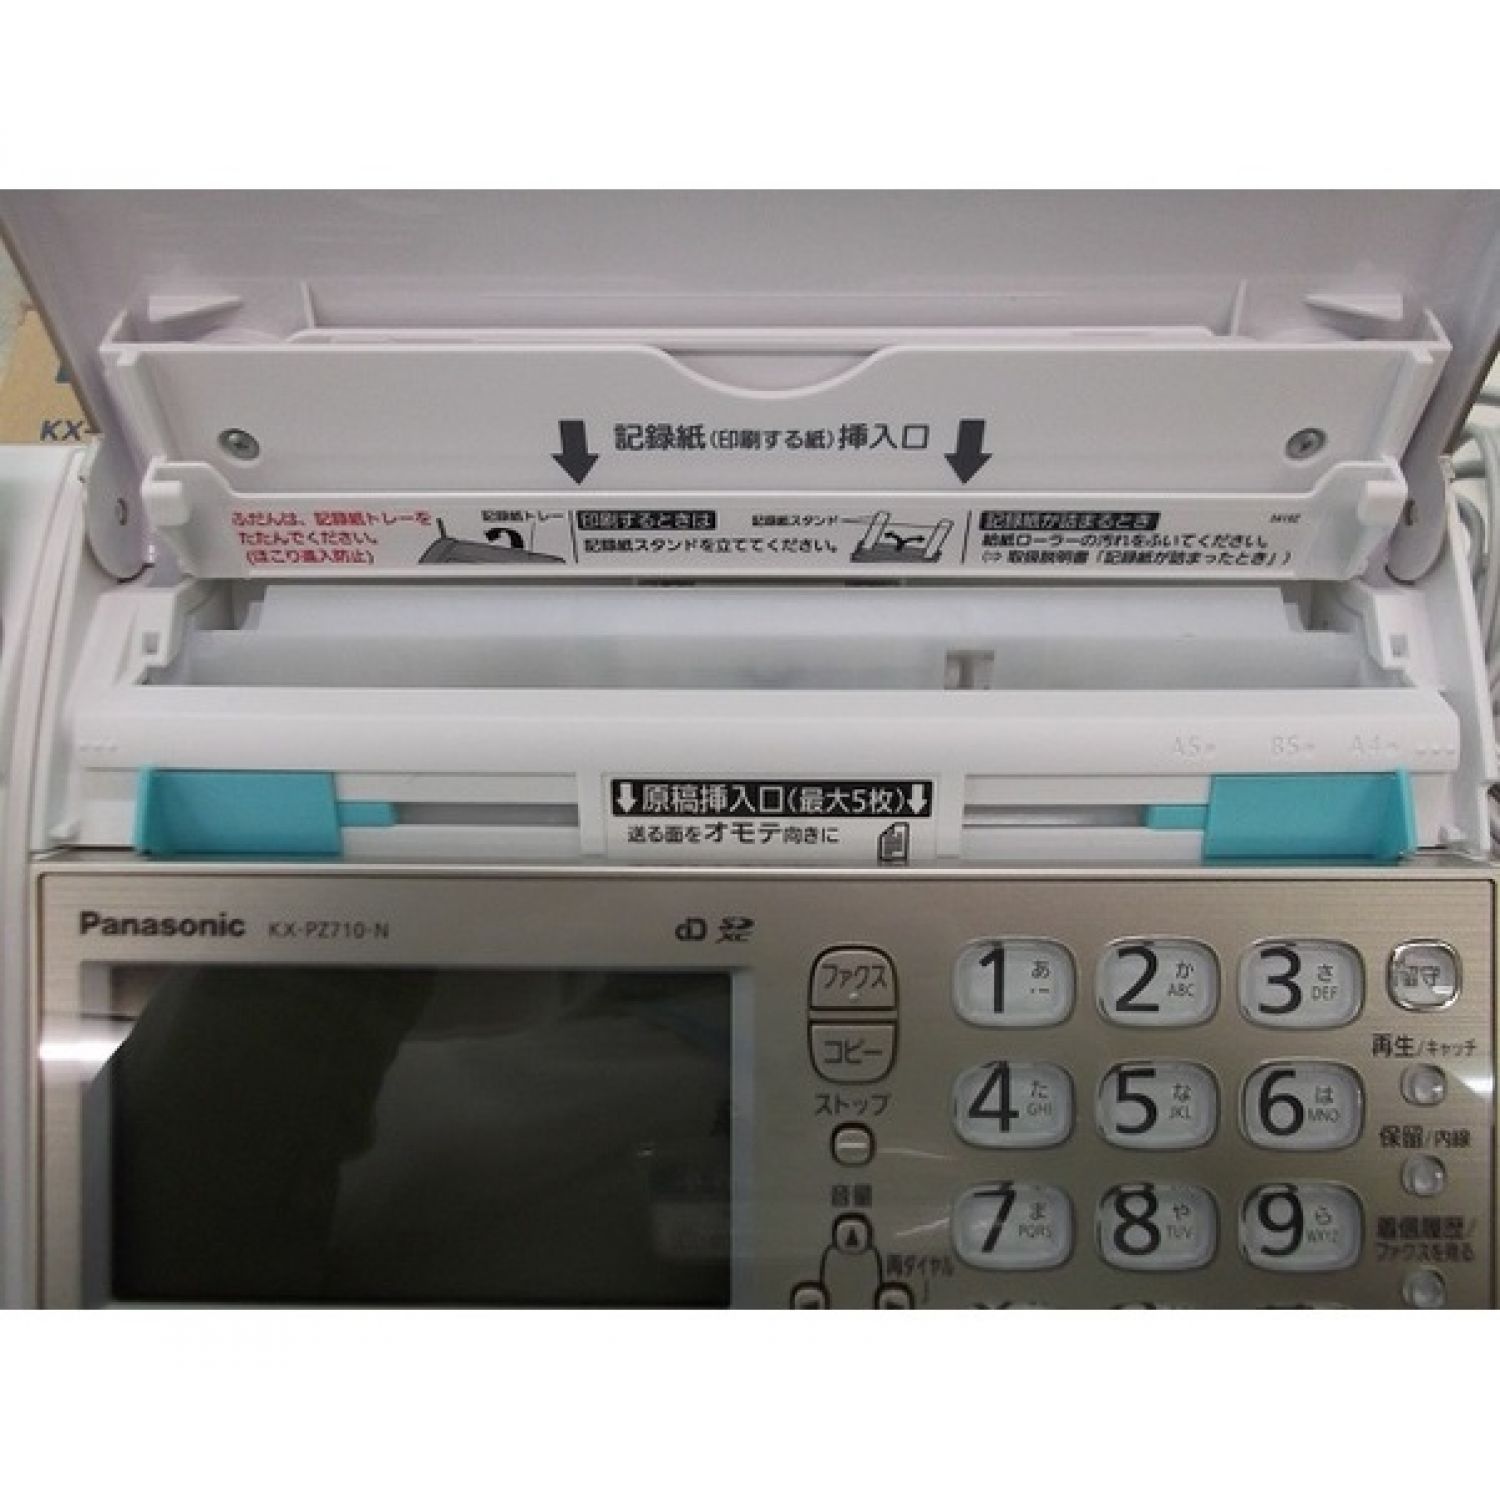 Panasonic FAX付電話機 KX-PZ710DL-N｜トレファクONLINE